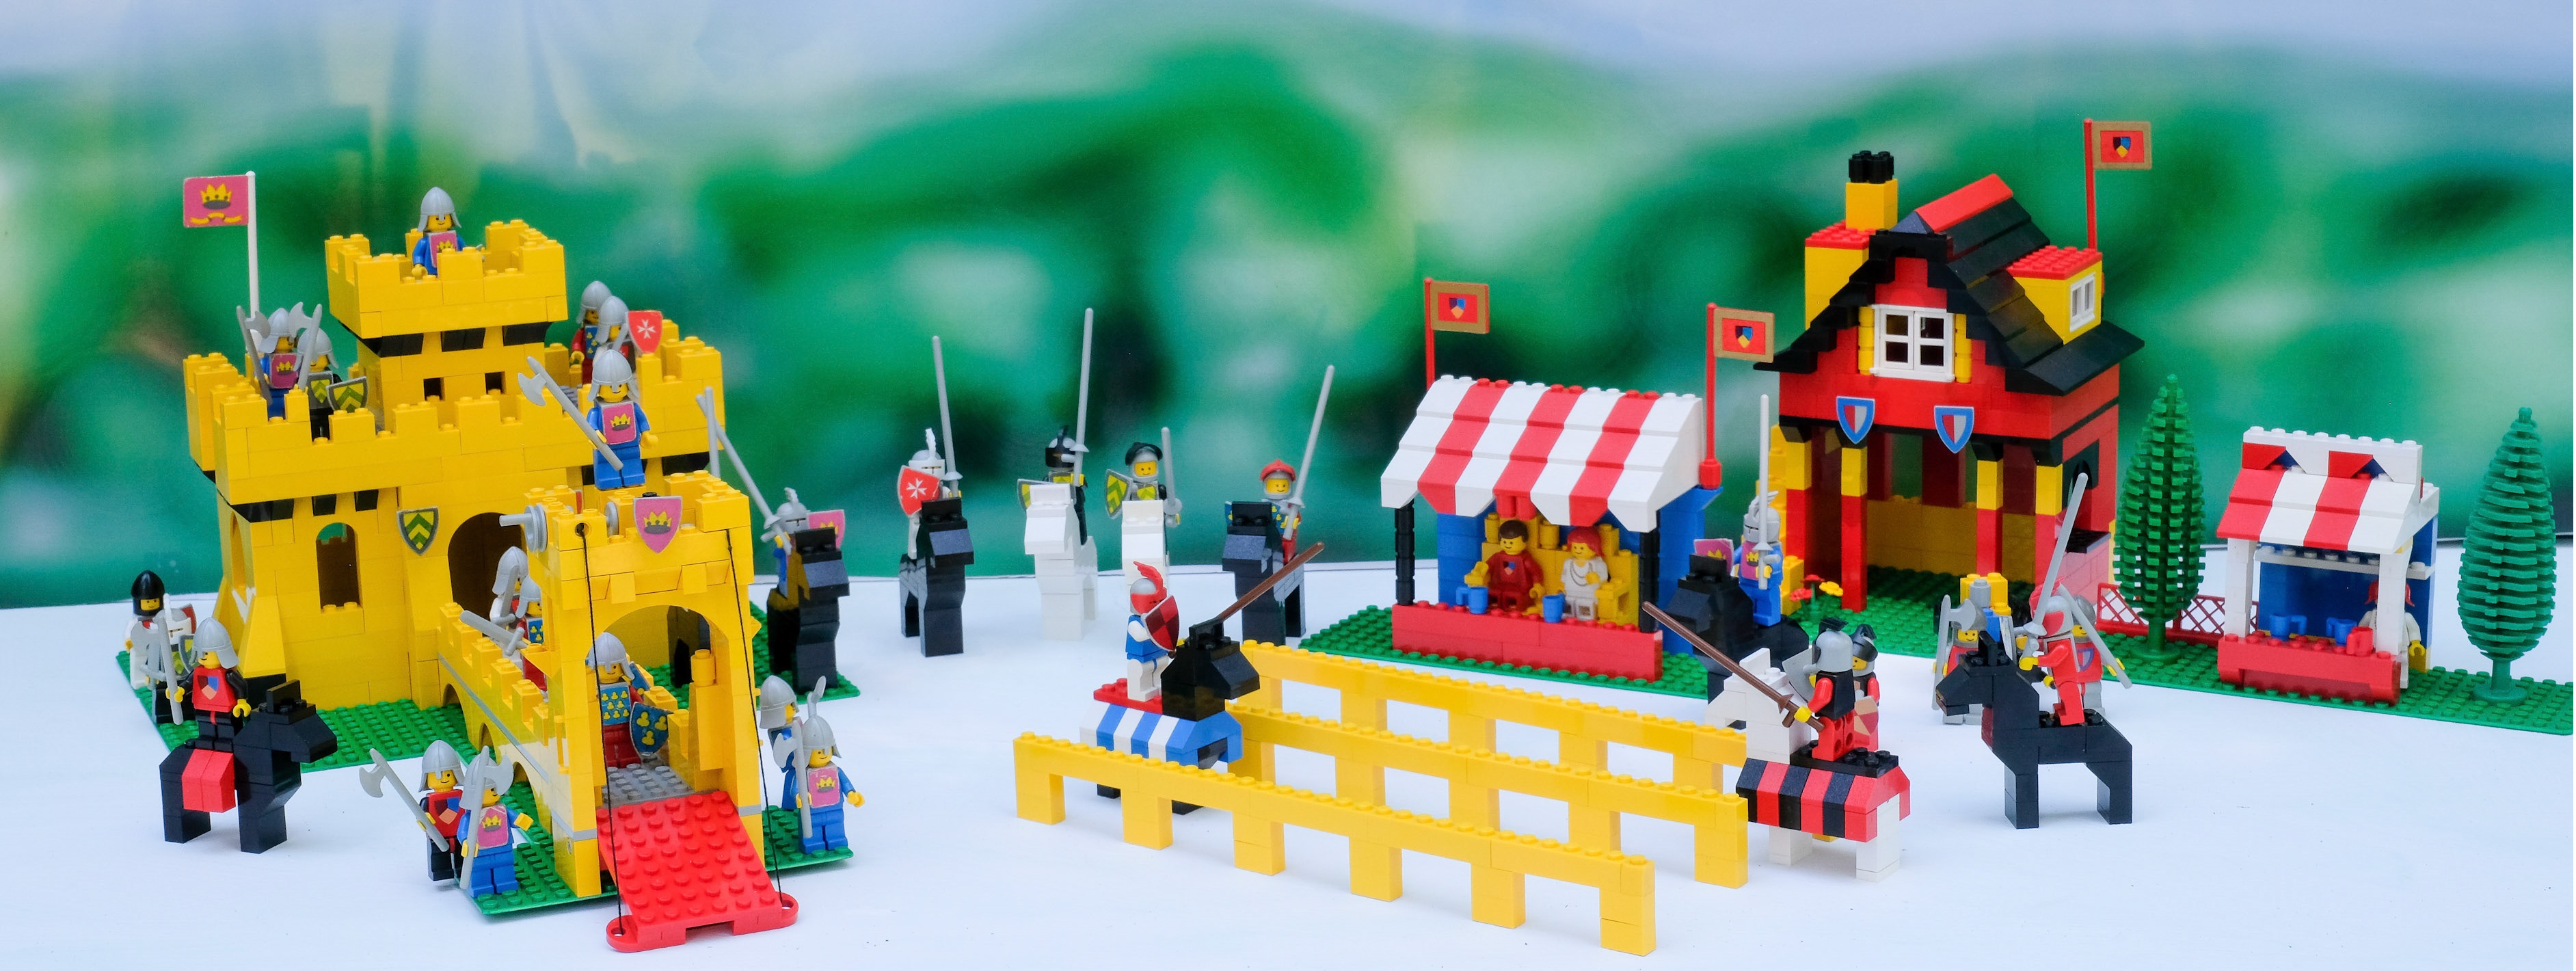 LEGO CASTLE - brickfanatix.hu